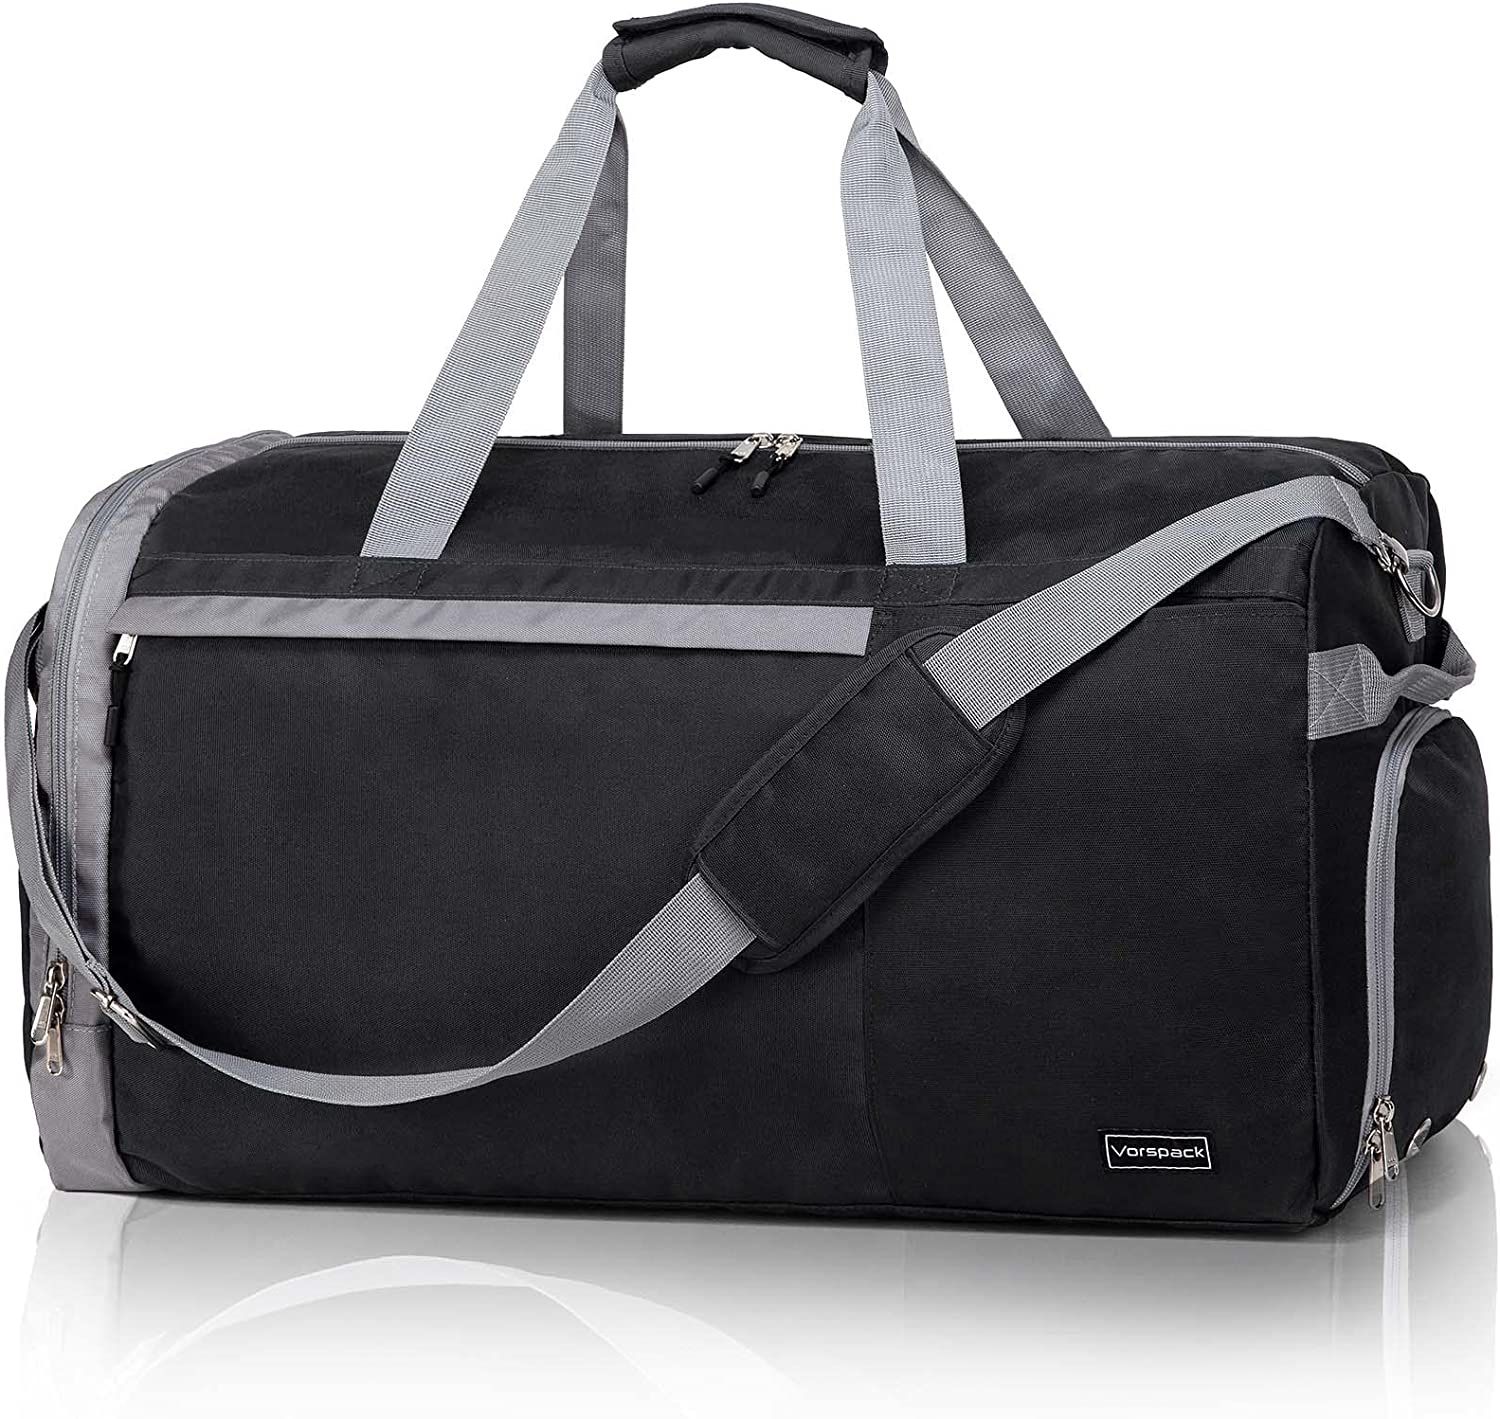 Vorspack Duffle Bag for Travel - 60L Duffel Bag